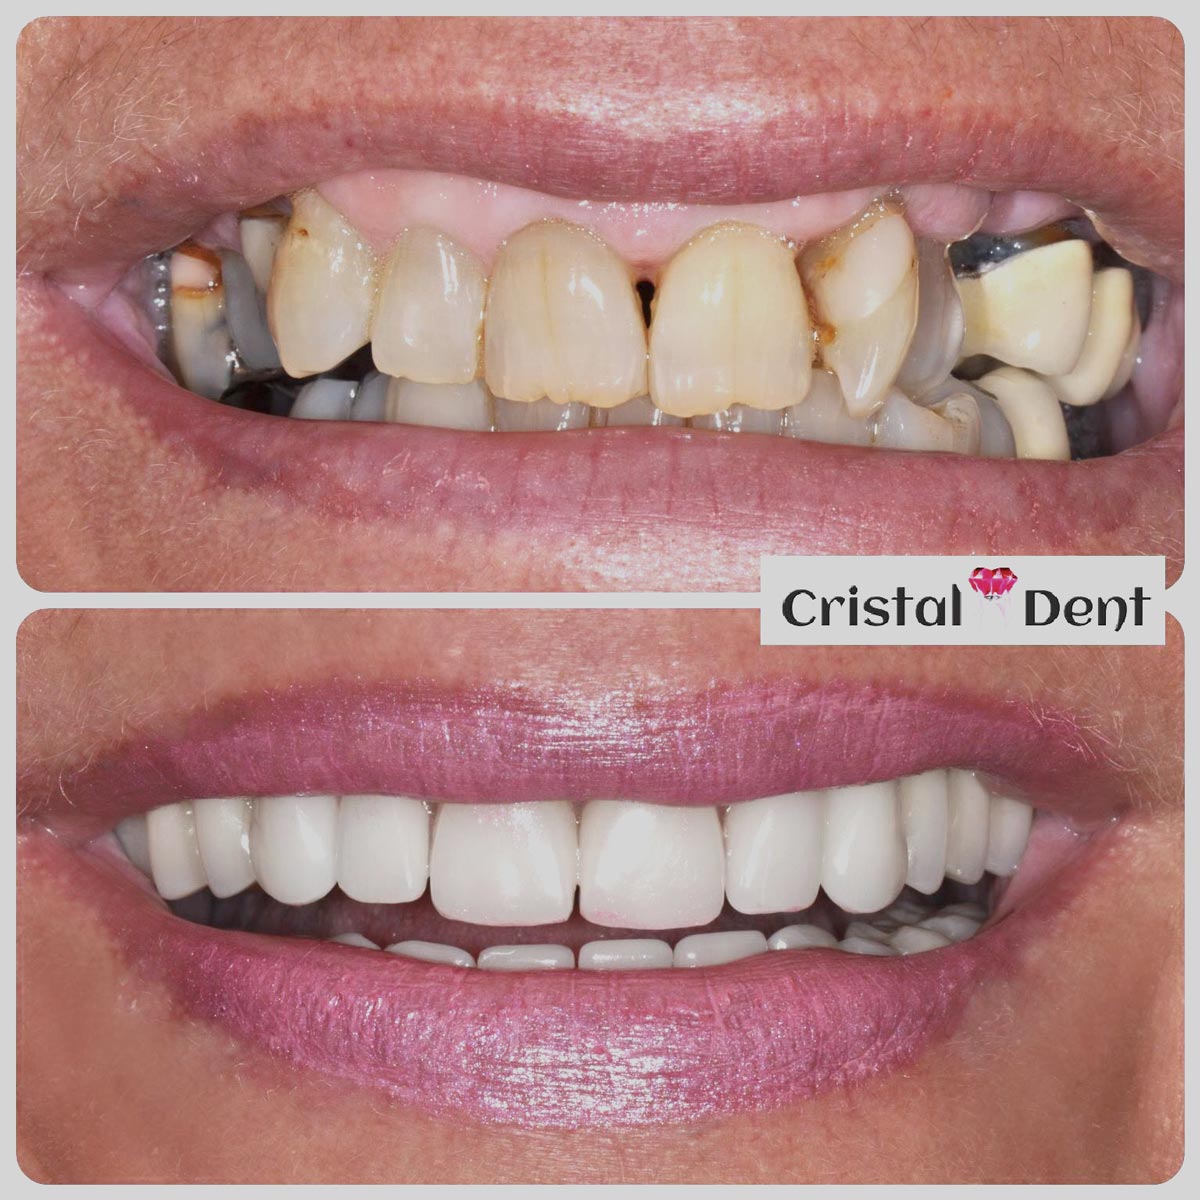 casi clinici implantologia dentale studio cristaldent torino